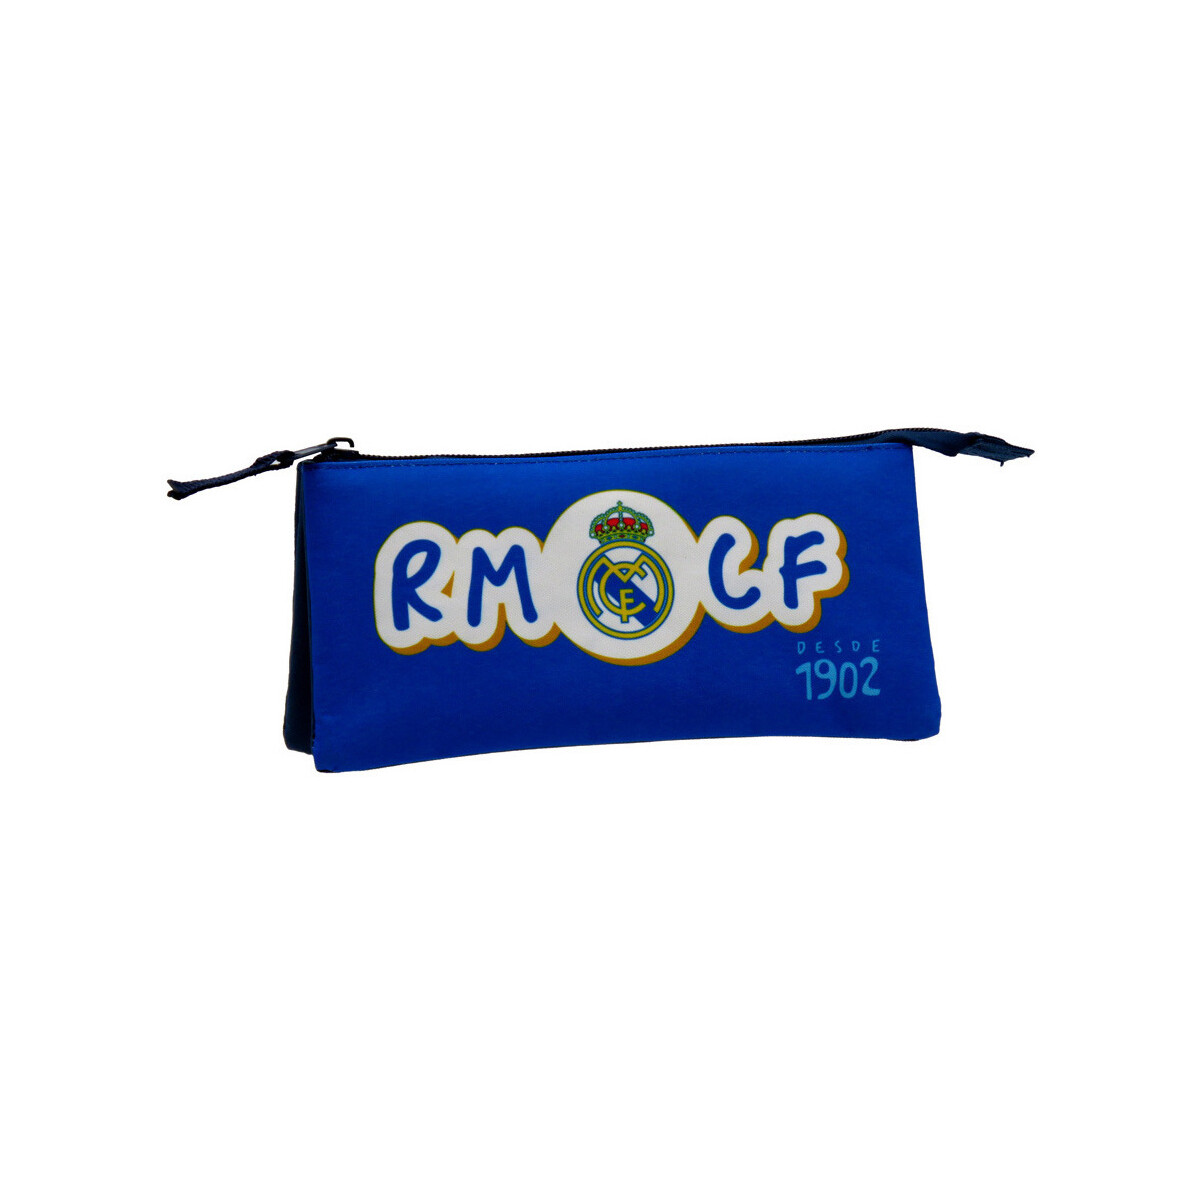 Malas Necessaire Real Madrid PT-533-RM Azul